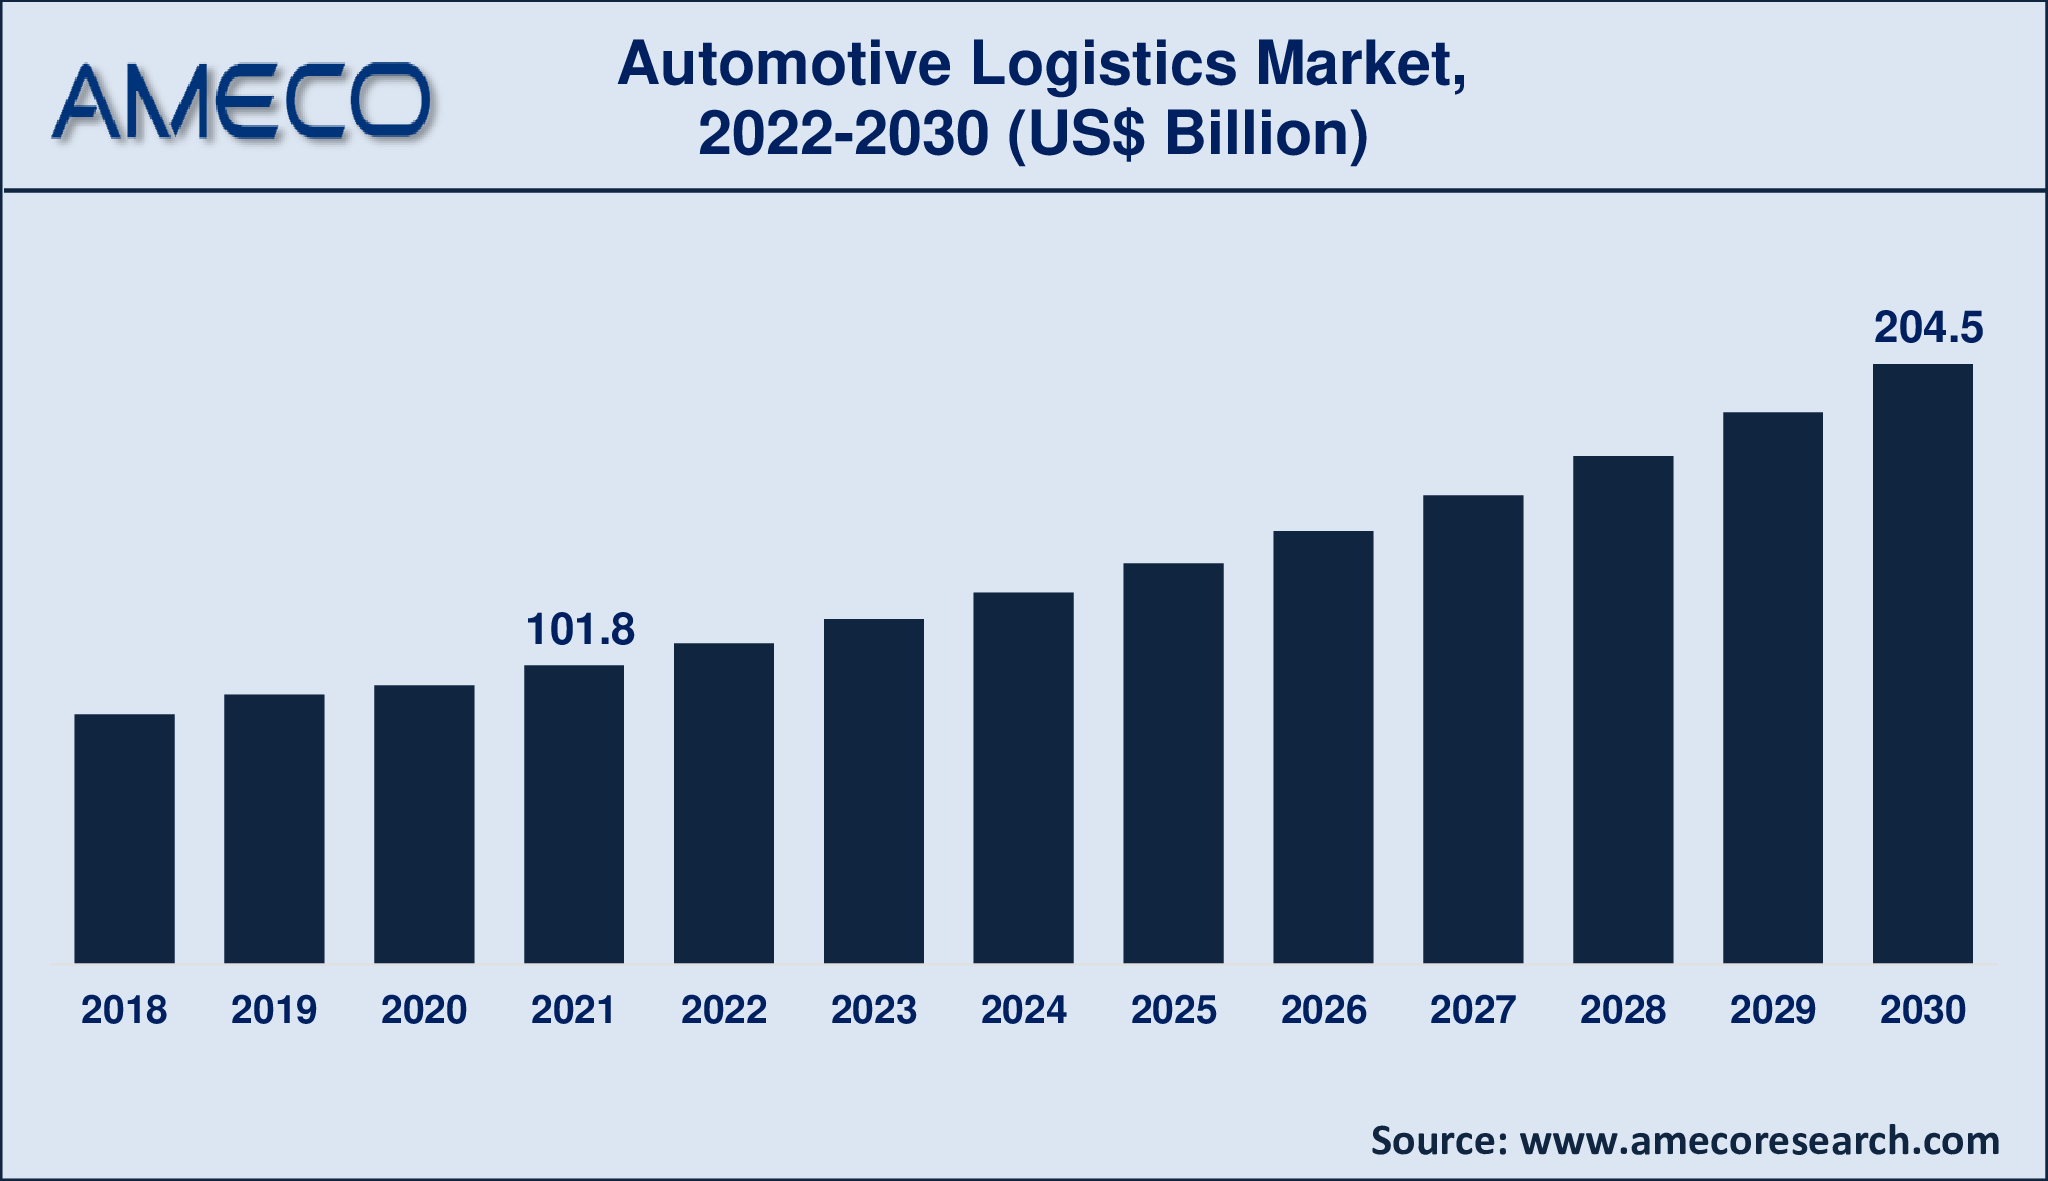 Automotive Logistics Market Growth